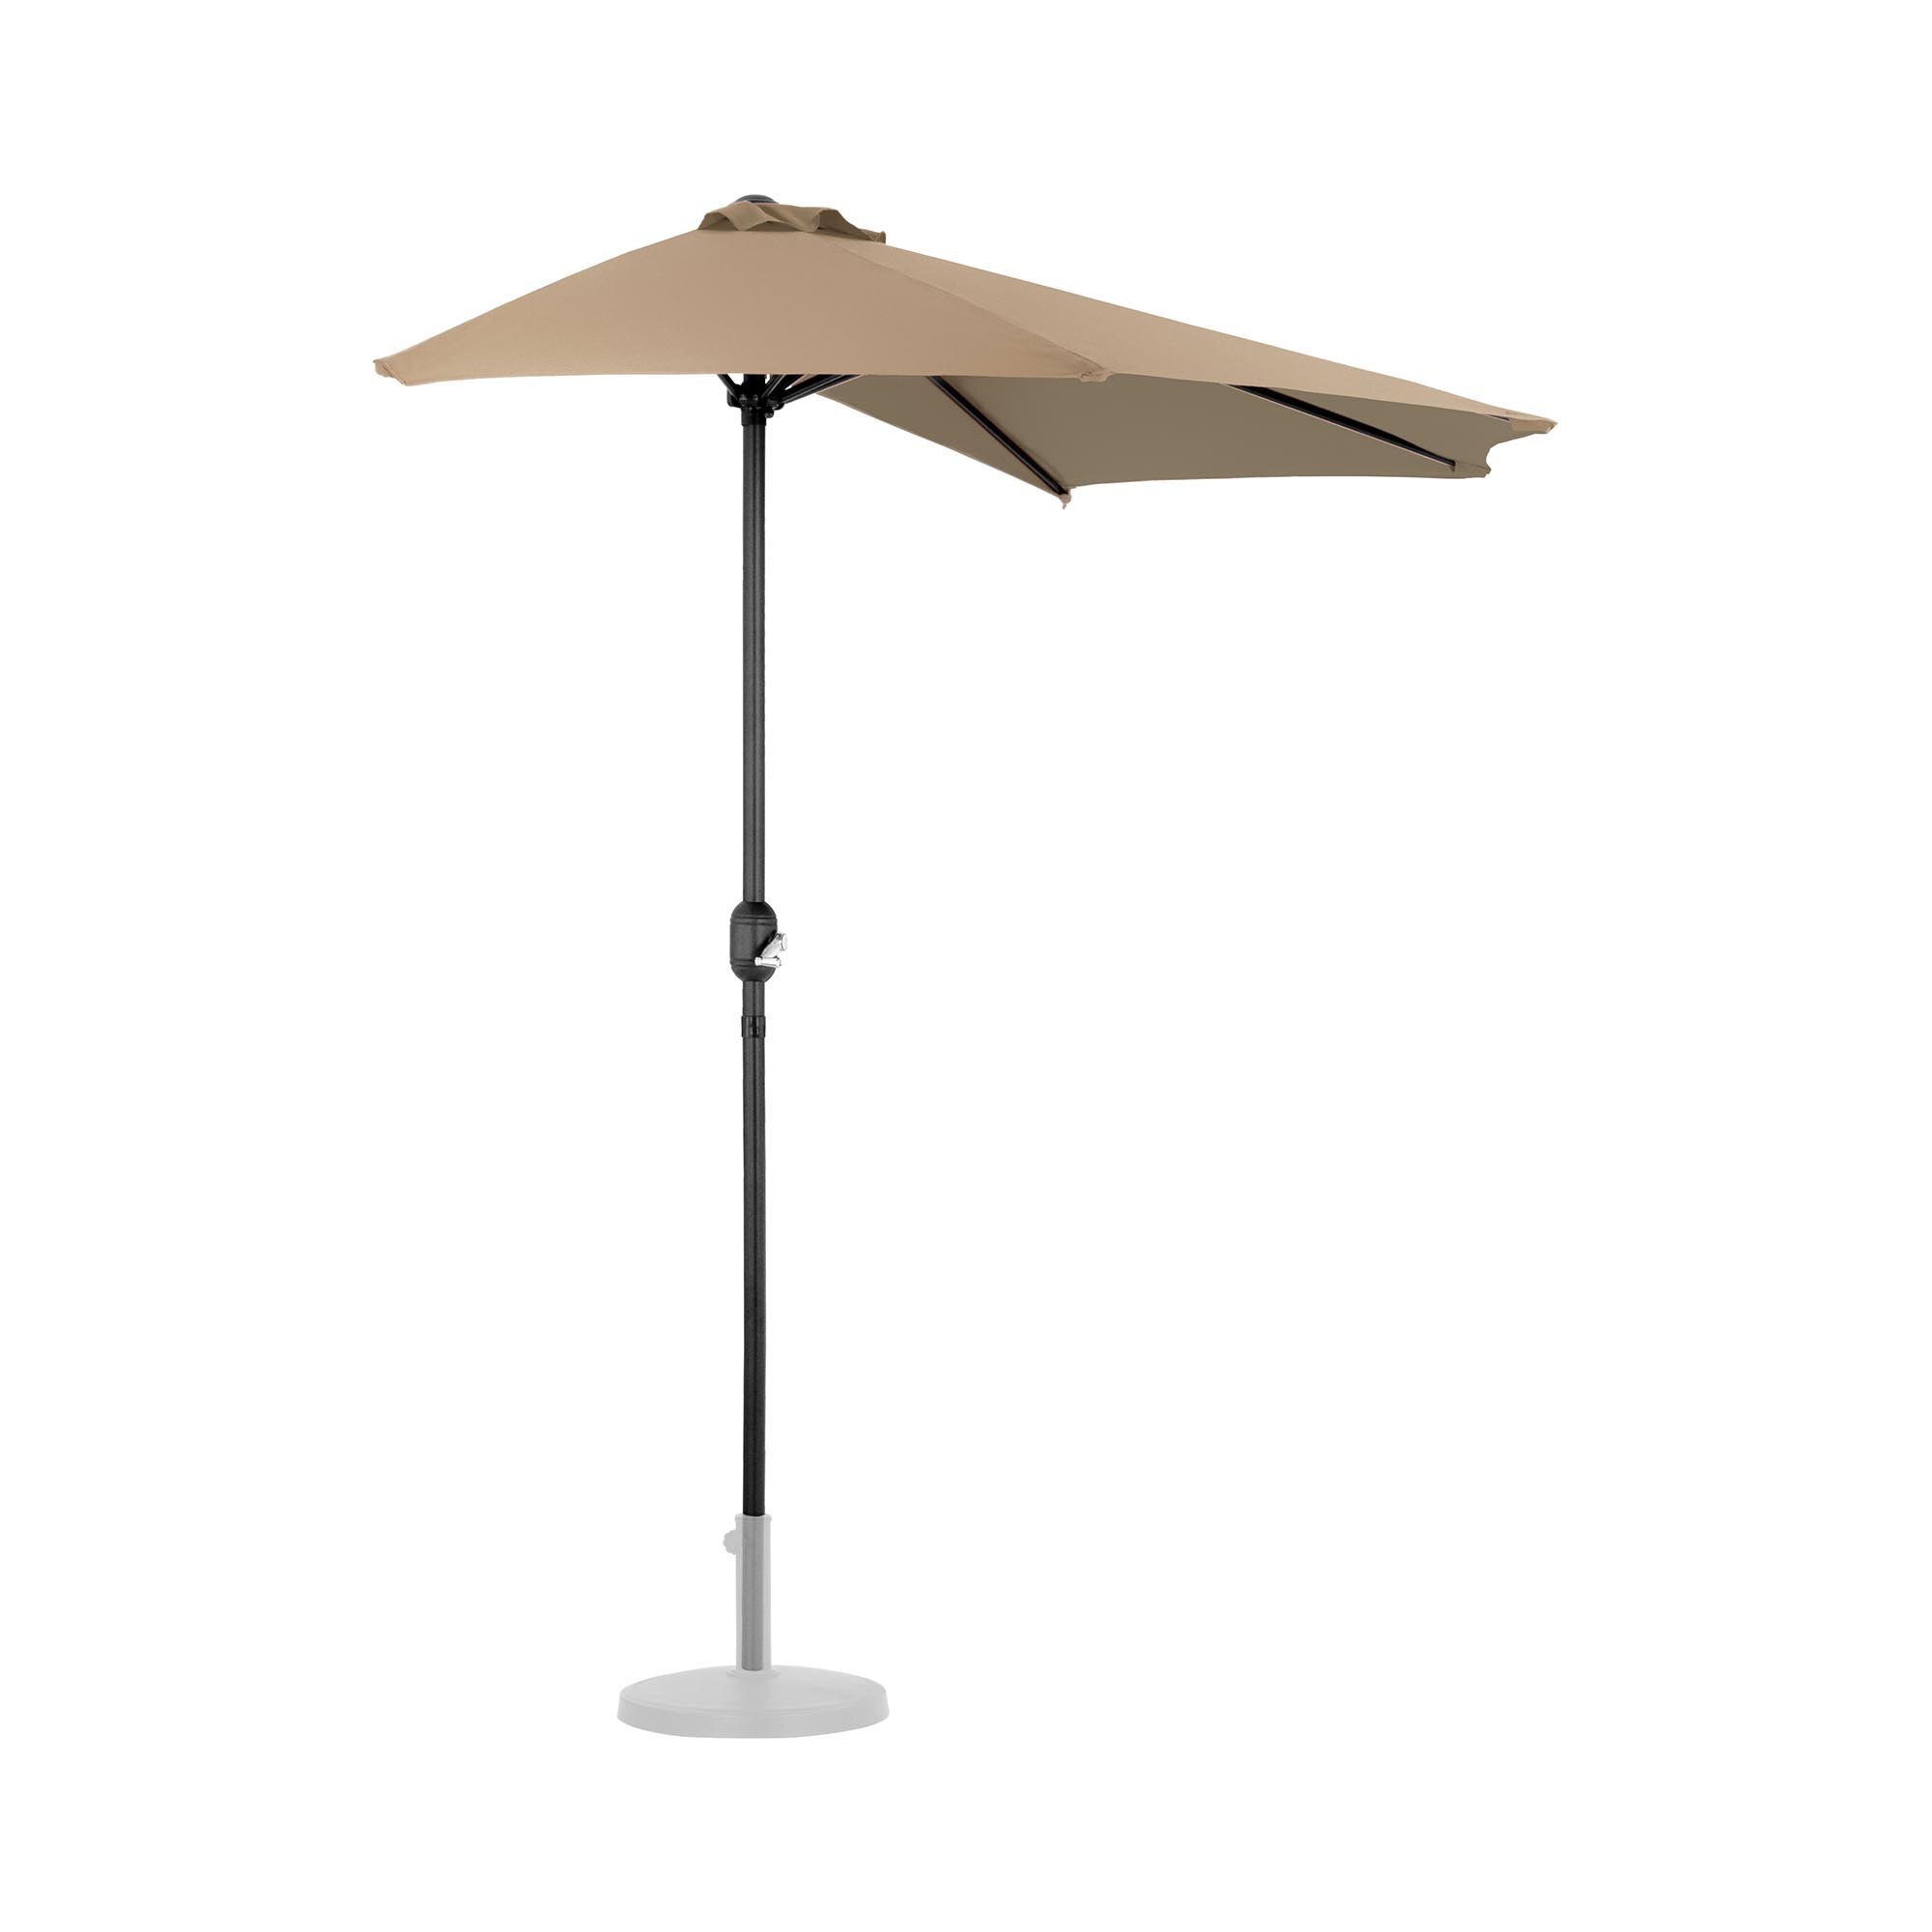 Uniprodo Halve parasol - Crème - vijfhoekig - 270 x 135 cm